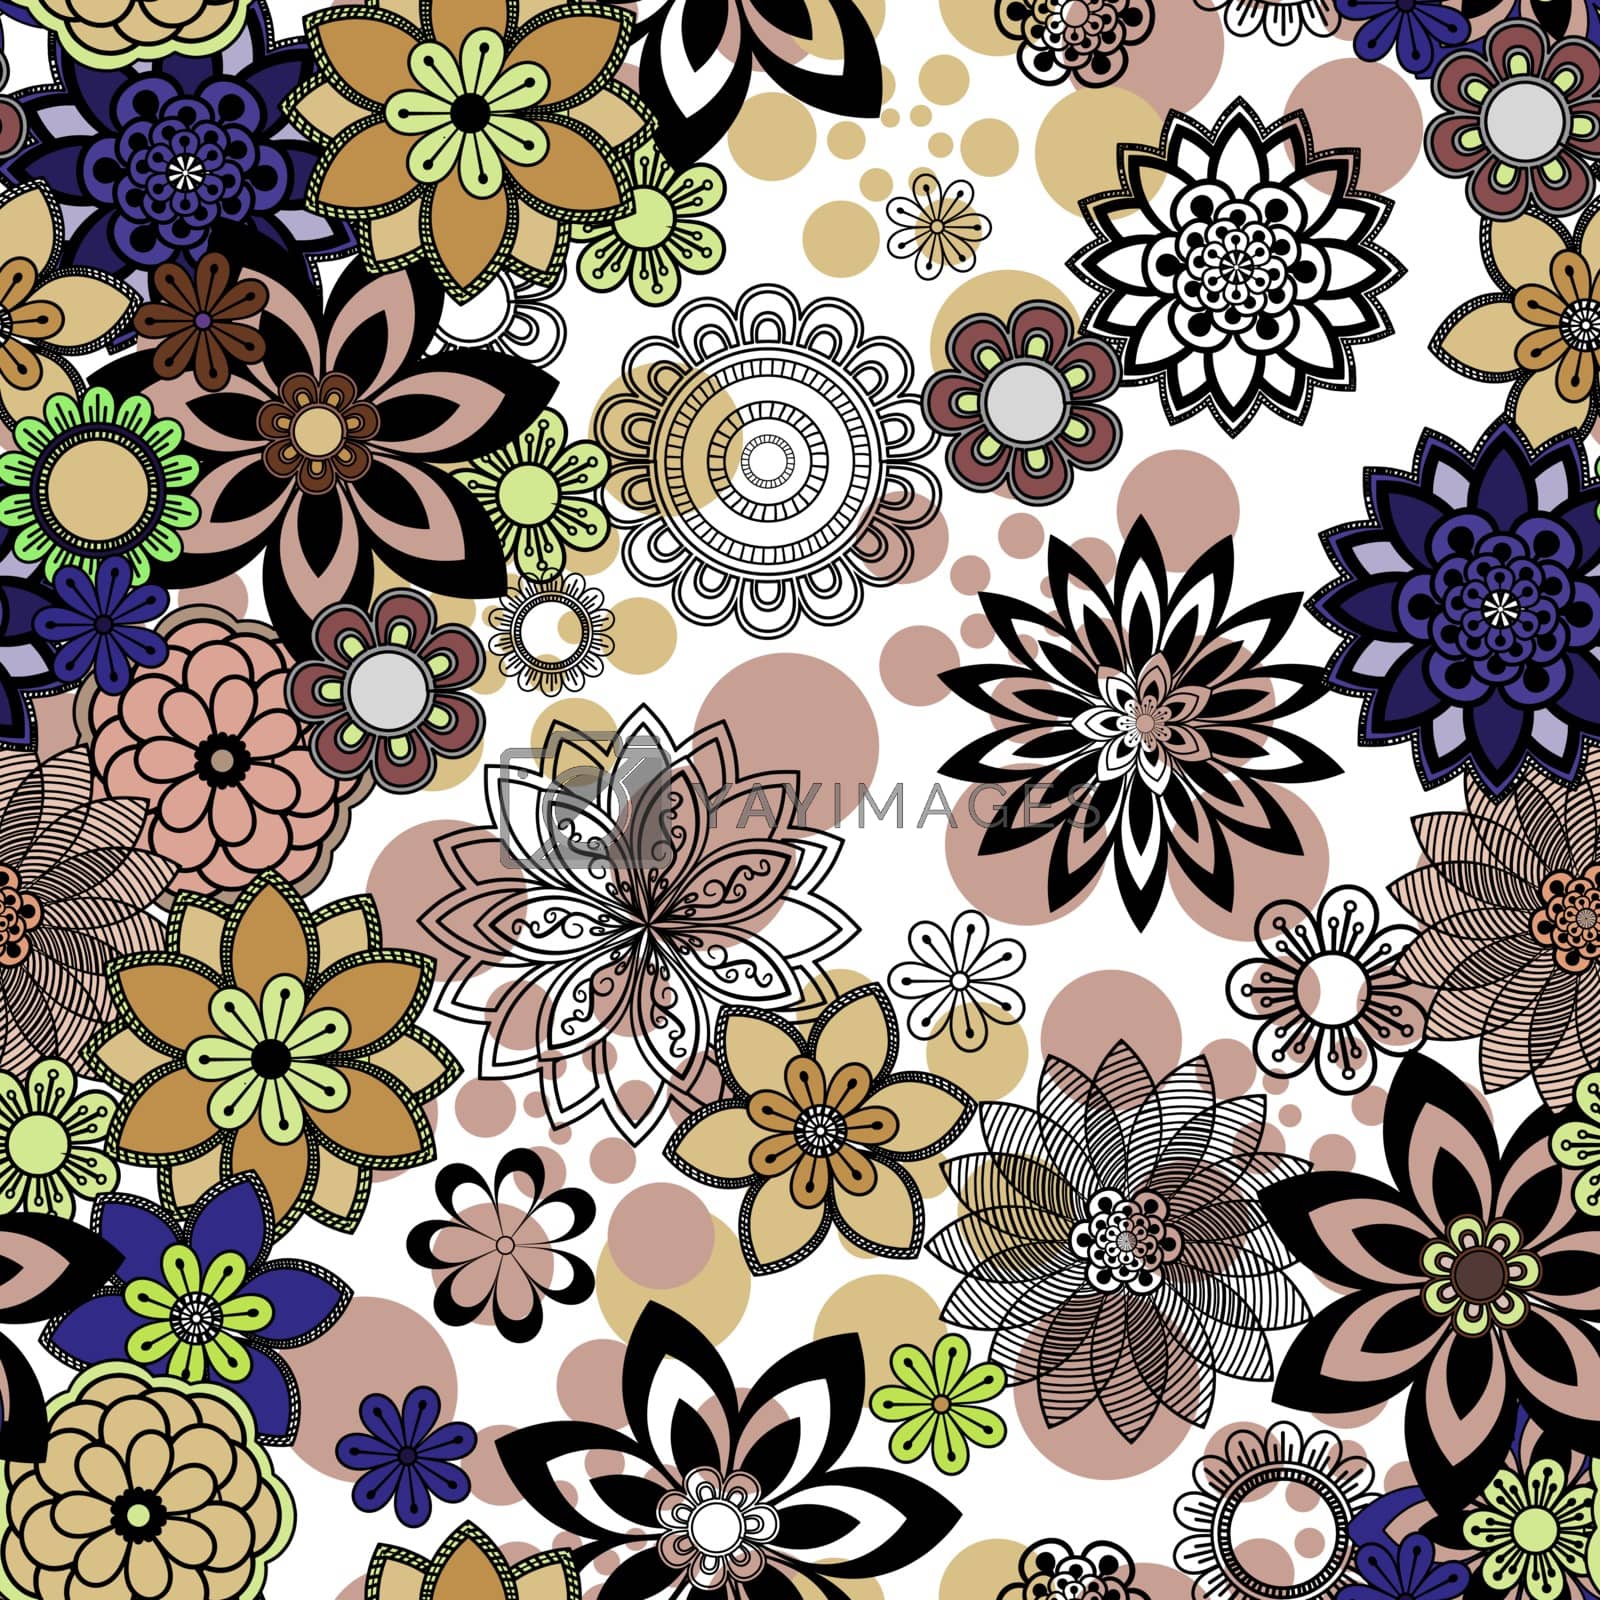 Royalty free image of Mandala ornament seamless pattern by elinorka